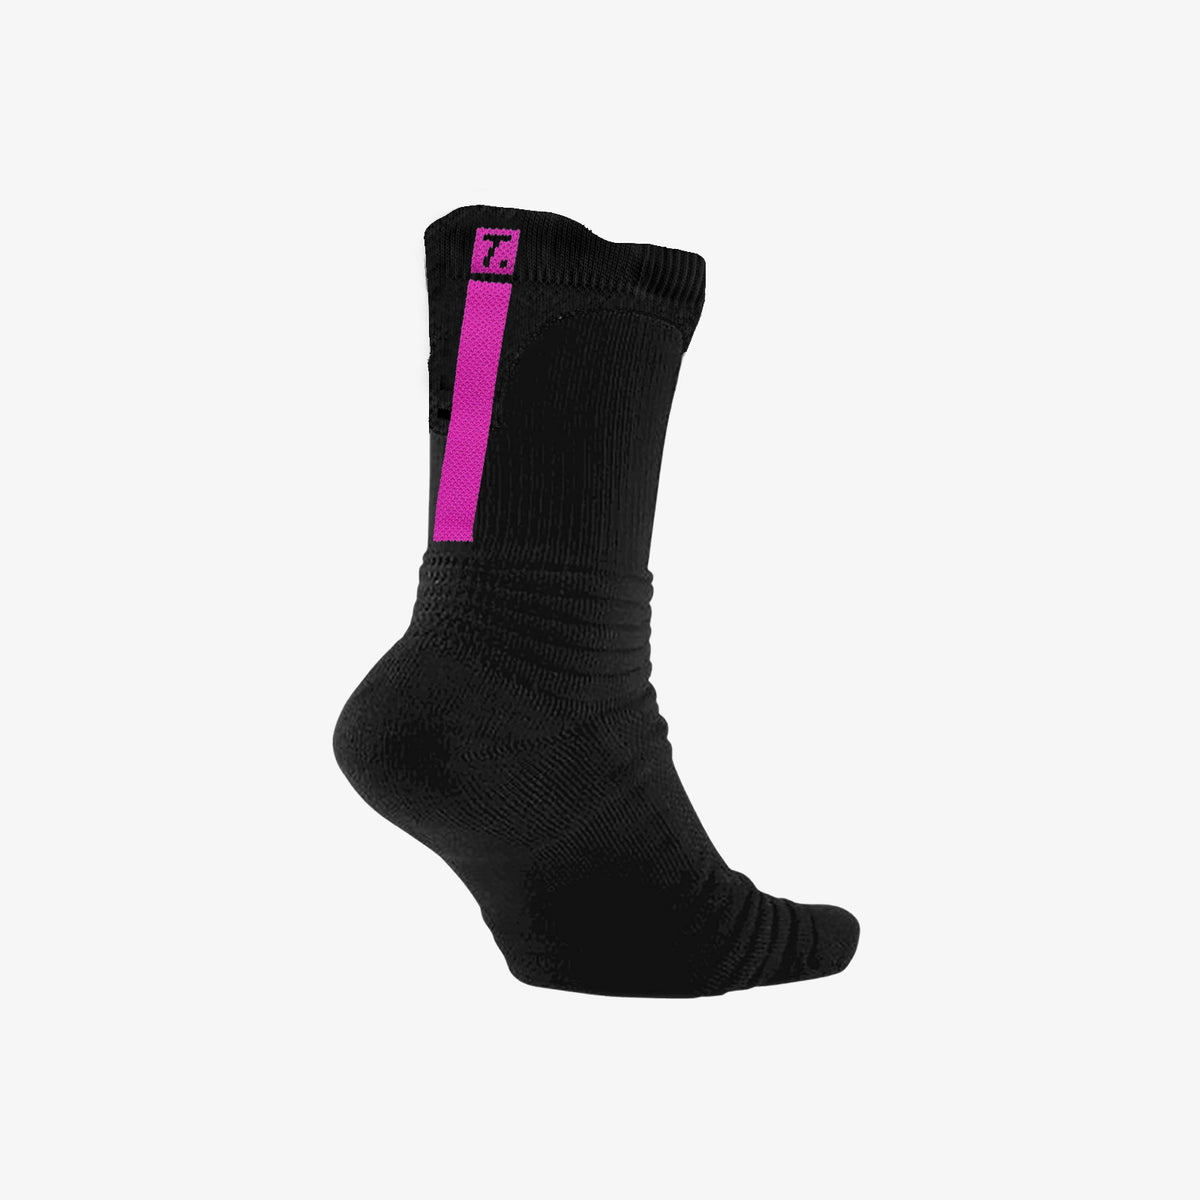 Throwback Cushion Crew Socks - Black/Neon Pink